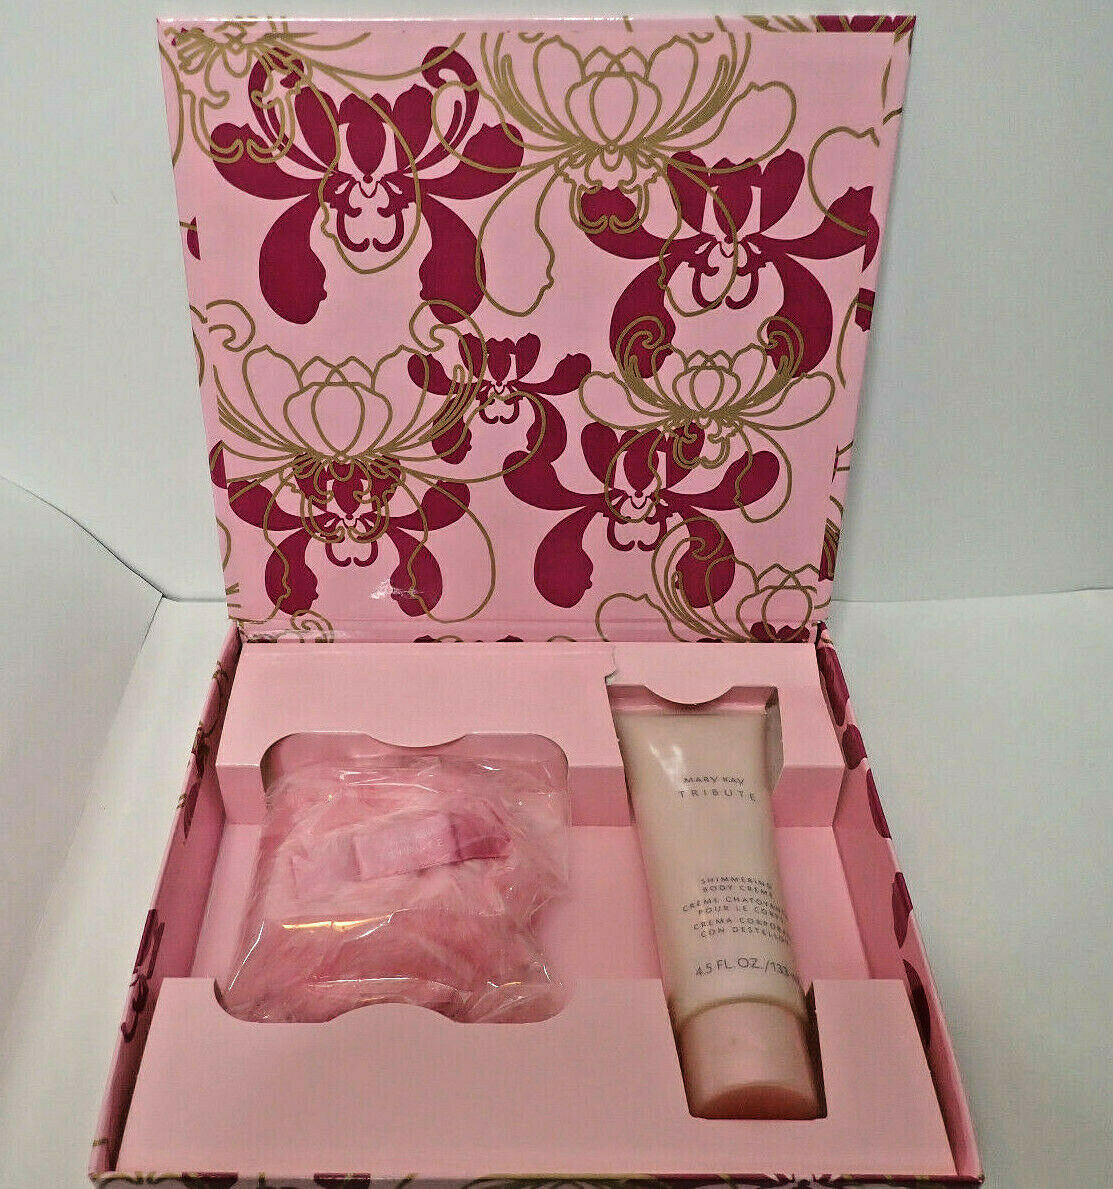 Mary Kay Tribute 4.5 Oz Shimmery Body Cream And Powder Puff Box Gift Set Nib